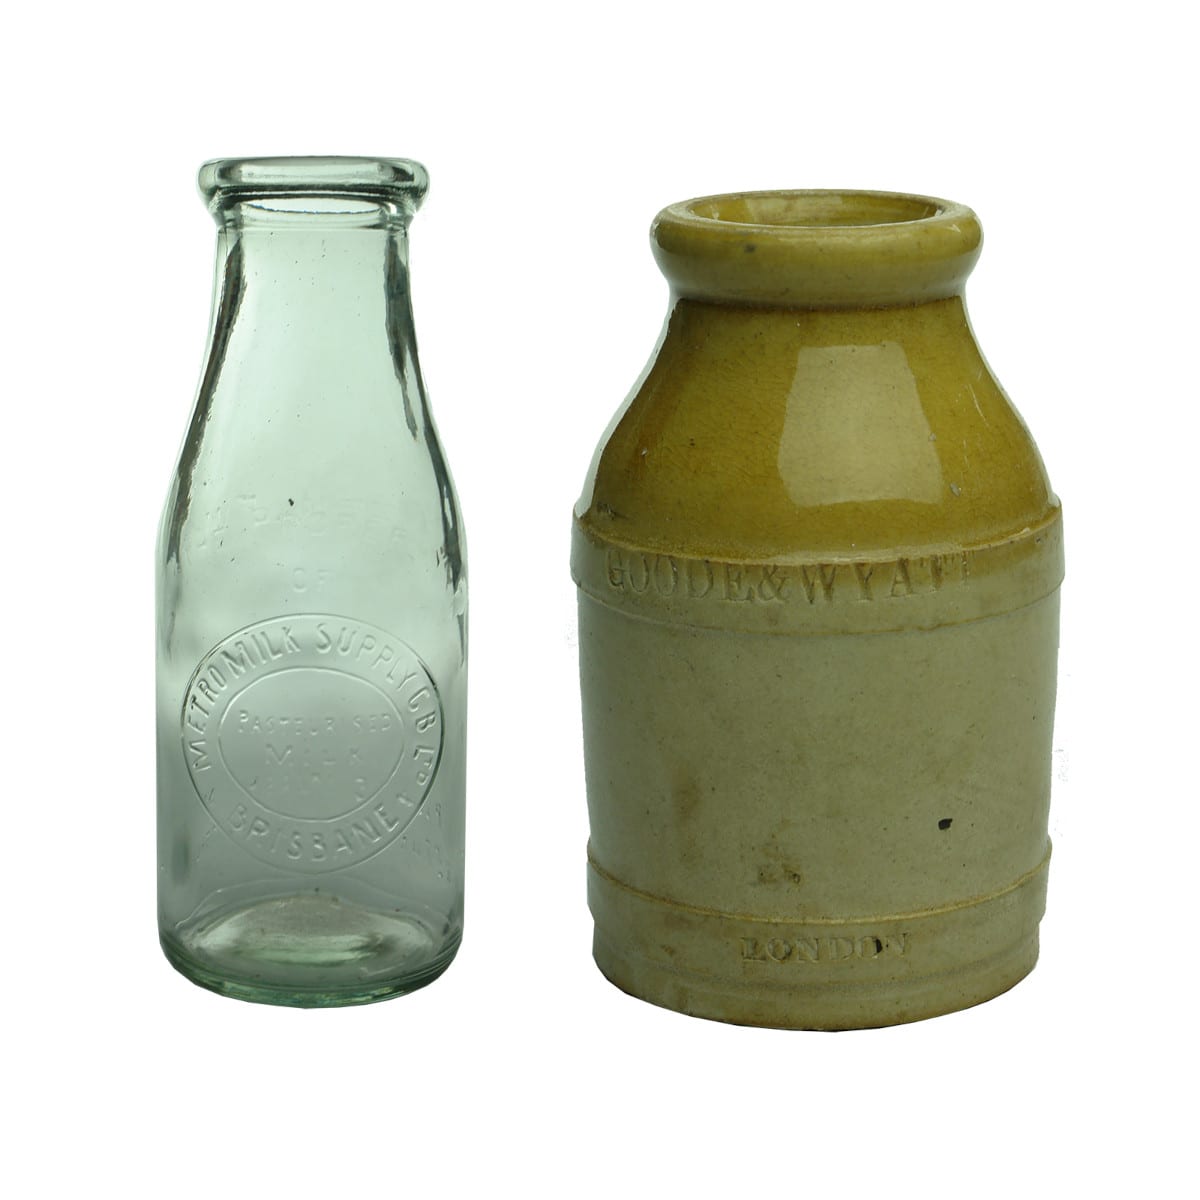 Two Household Items: Metro Milk Supply Brisbane Pint Milk and Goode & Wyatt, London stone jar.